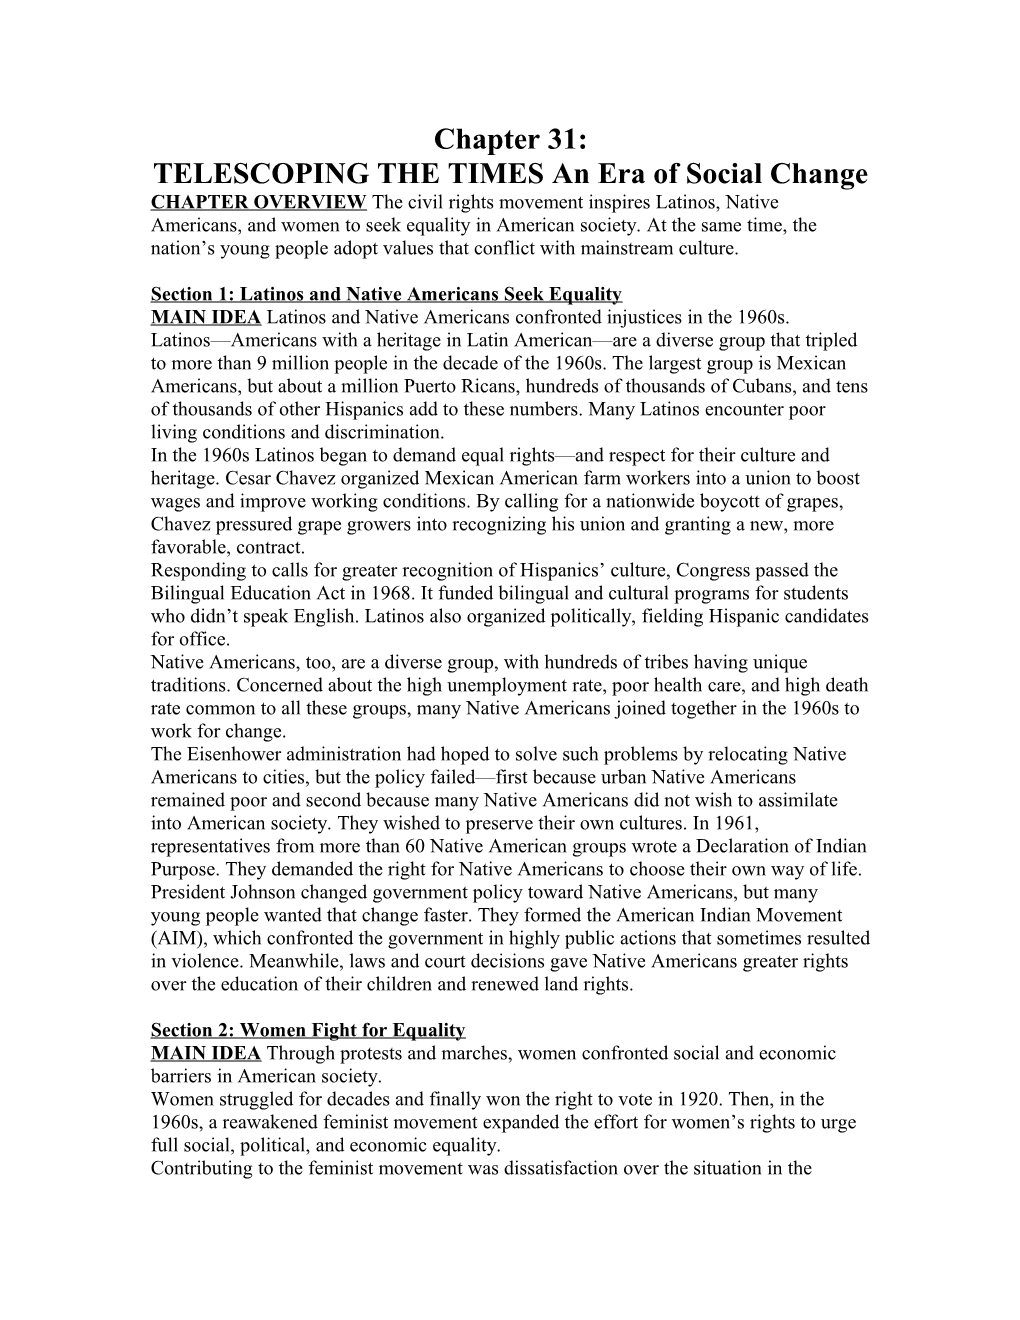 TELESCOPING the TIMES an Era of Social Change